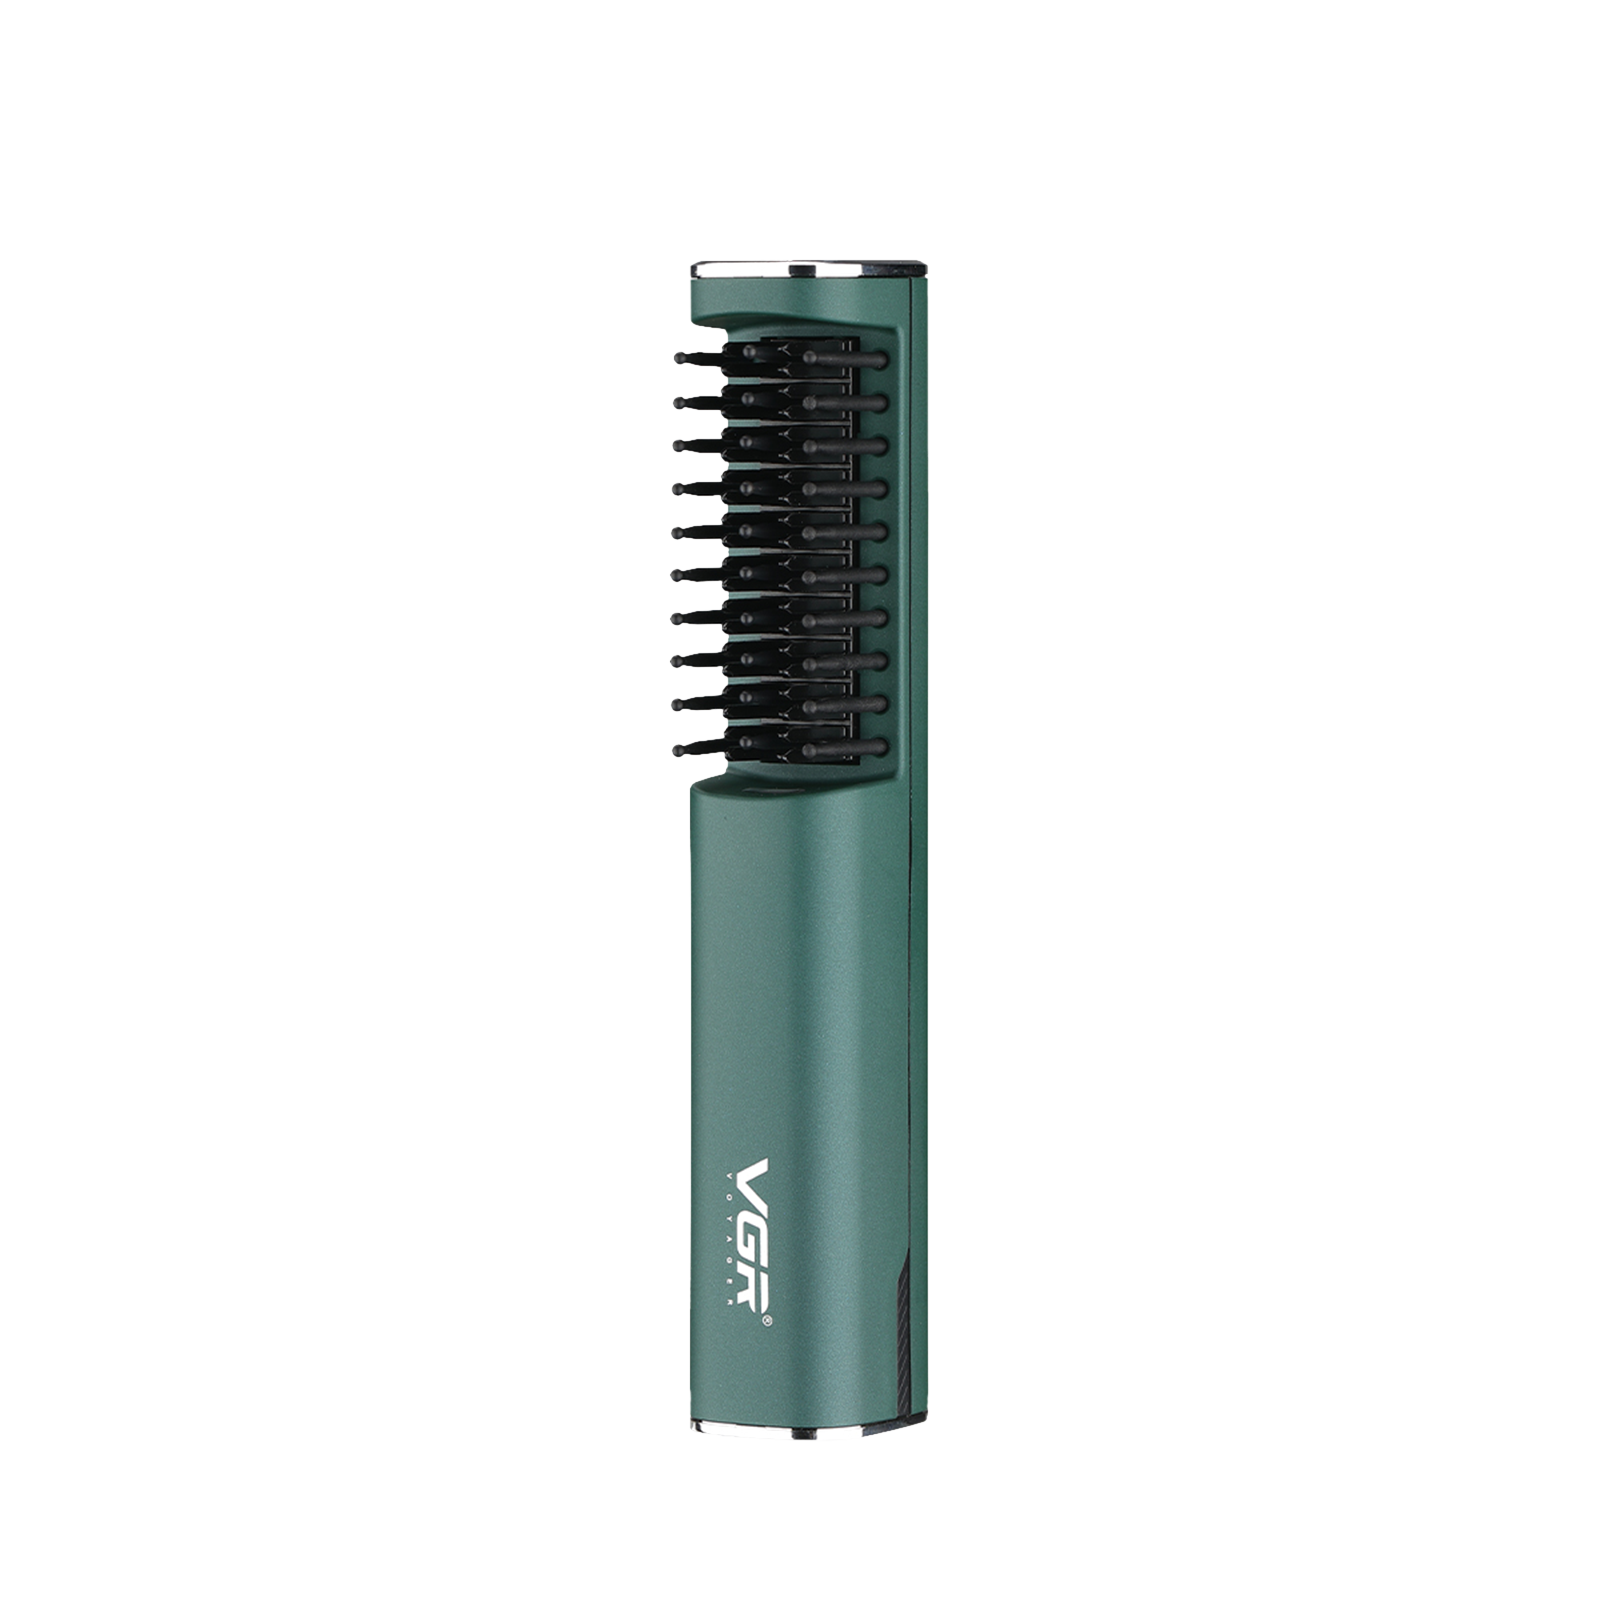 VGR Corded Hair Straightener Brush (2 Temperature Settings, VGR 587, Green)_1